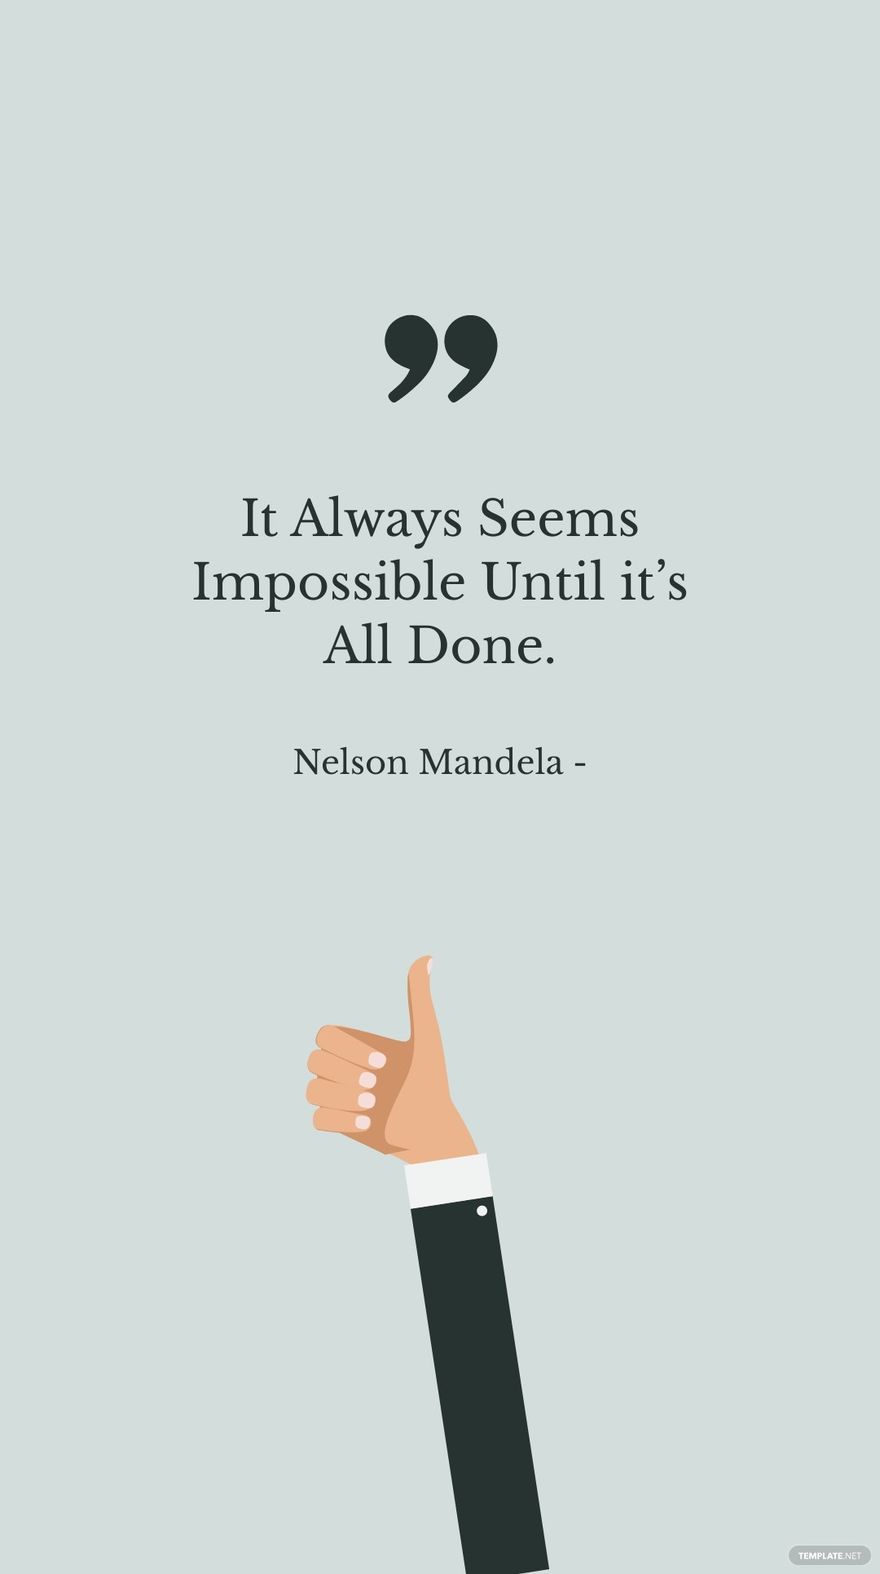 Free Nelson Mandela - It Always Seems Impossible Until it’s All Done. in JPG